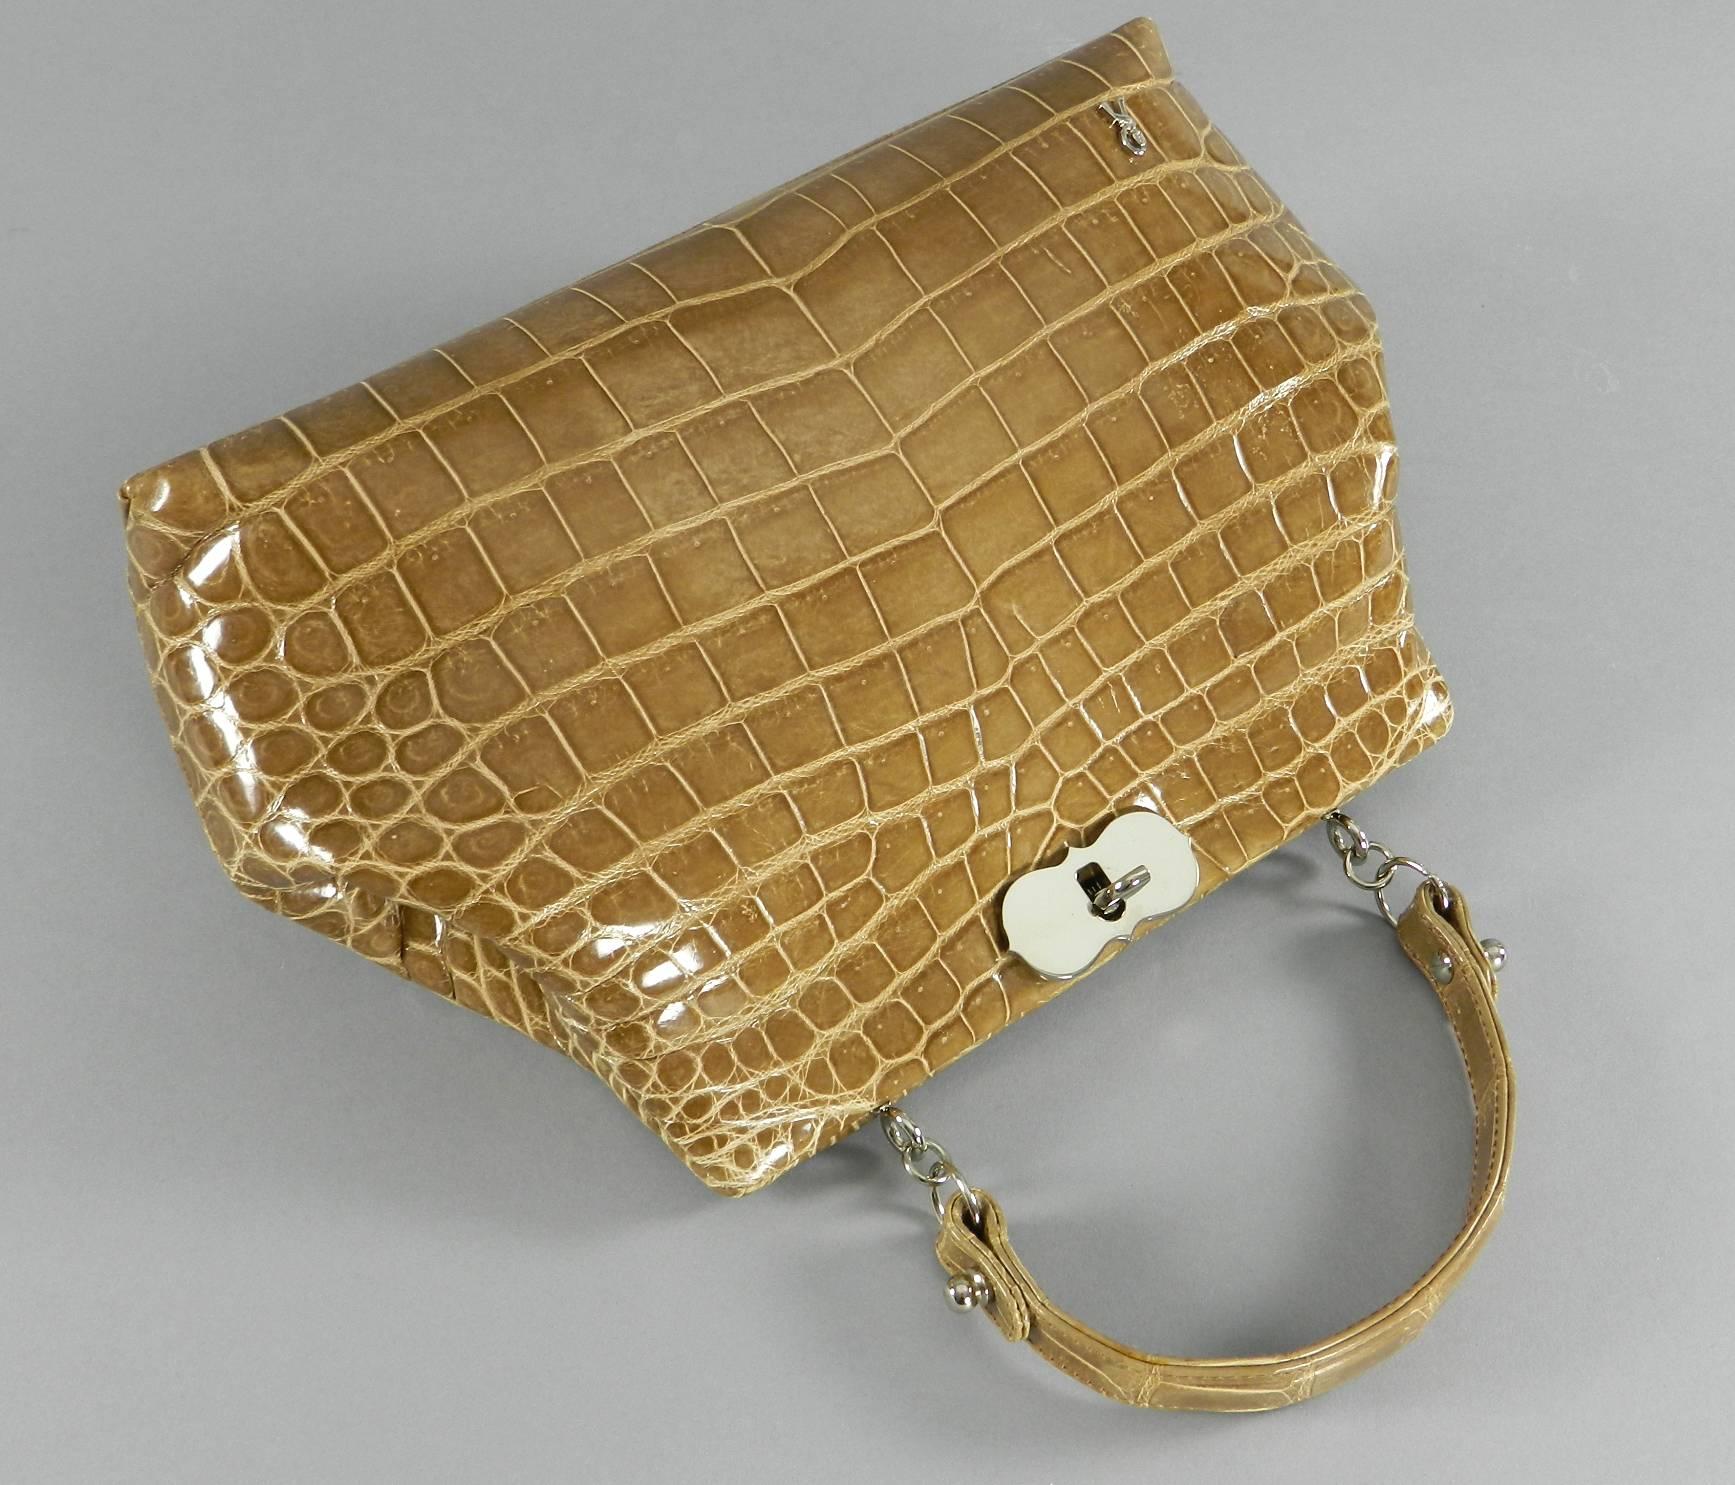 Roberta di Camerino crocodile handbag. Shiny silvertone metal frame and accents. Excellent condition. Body measures 12 x 7.5 x 3